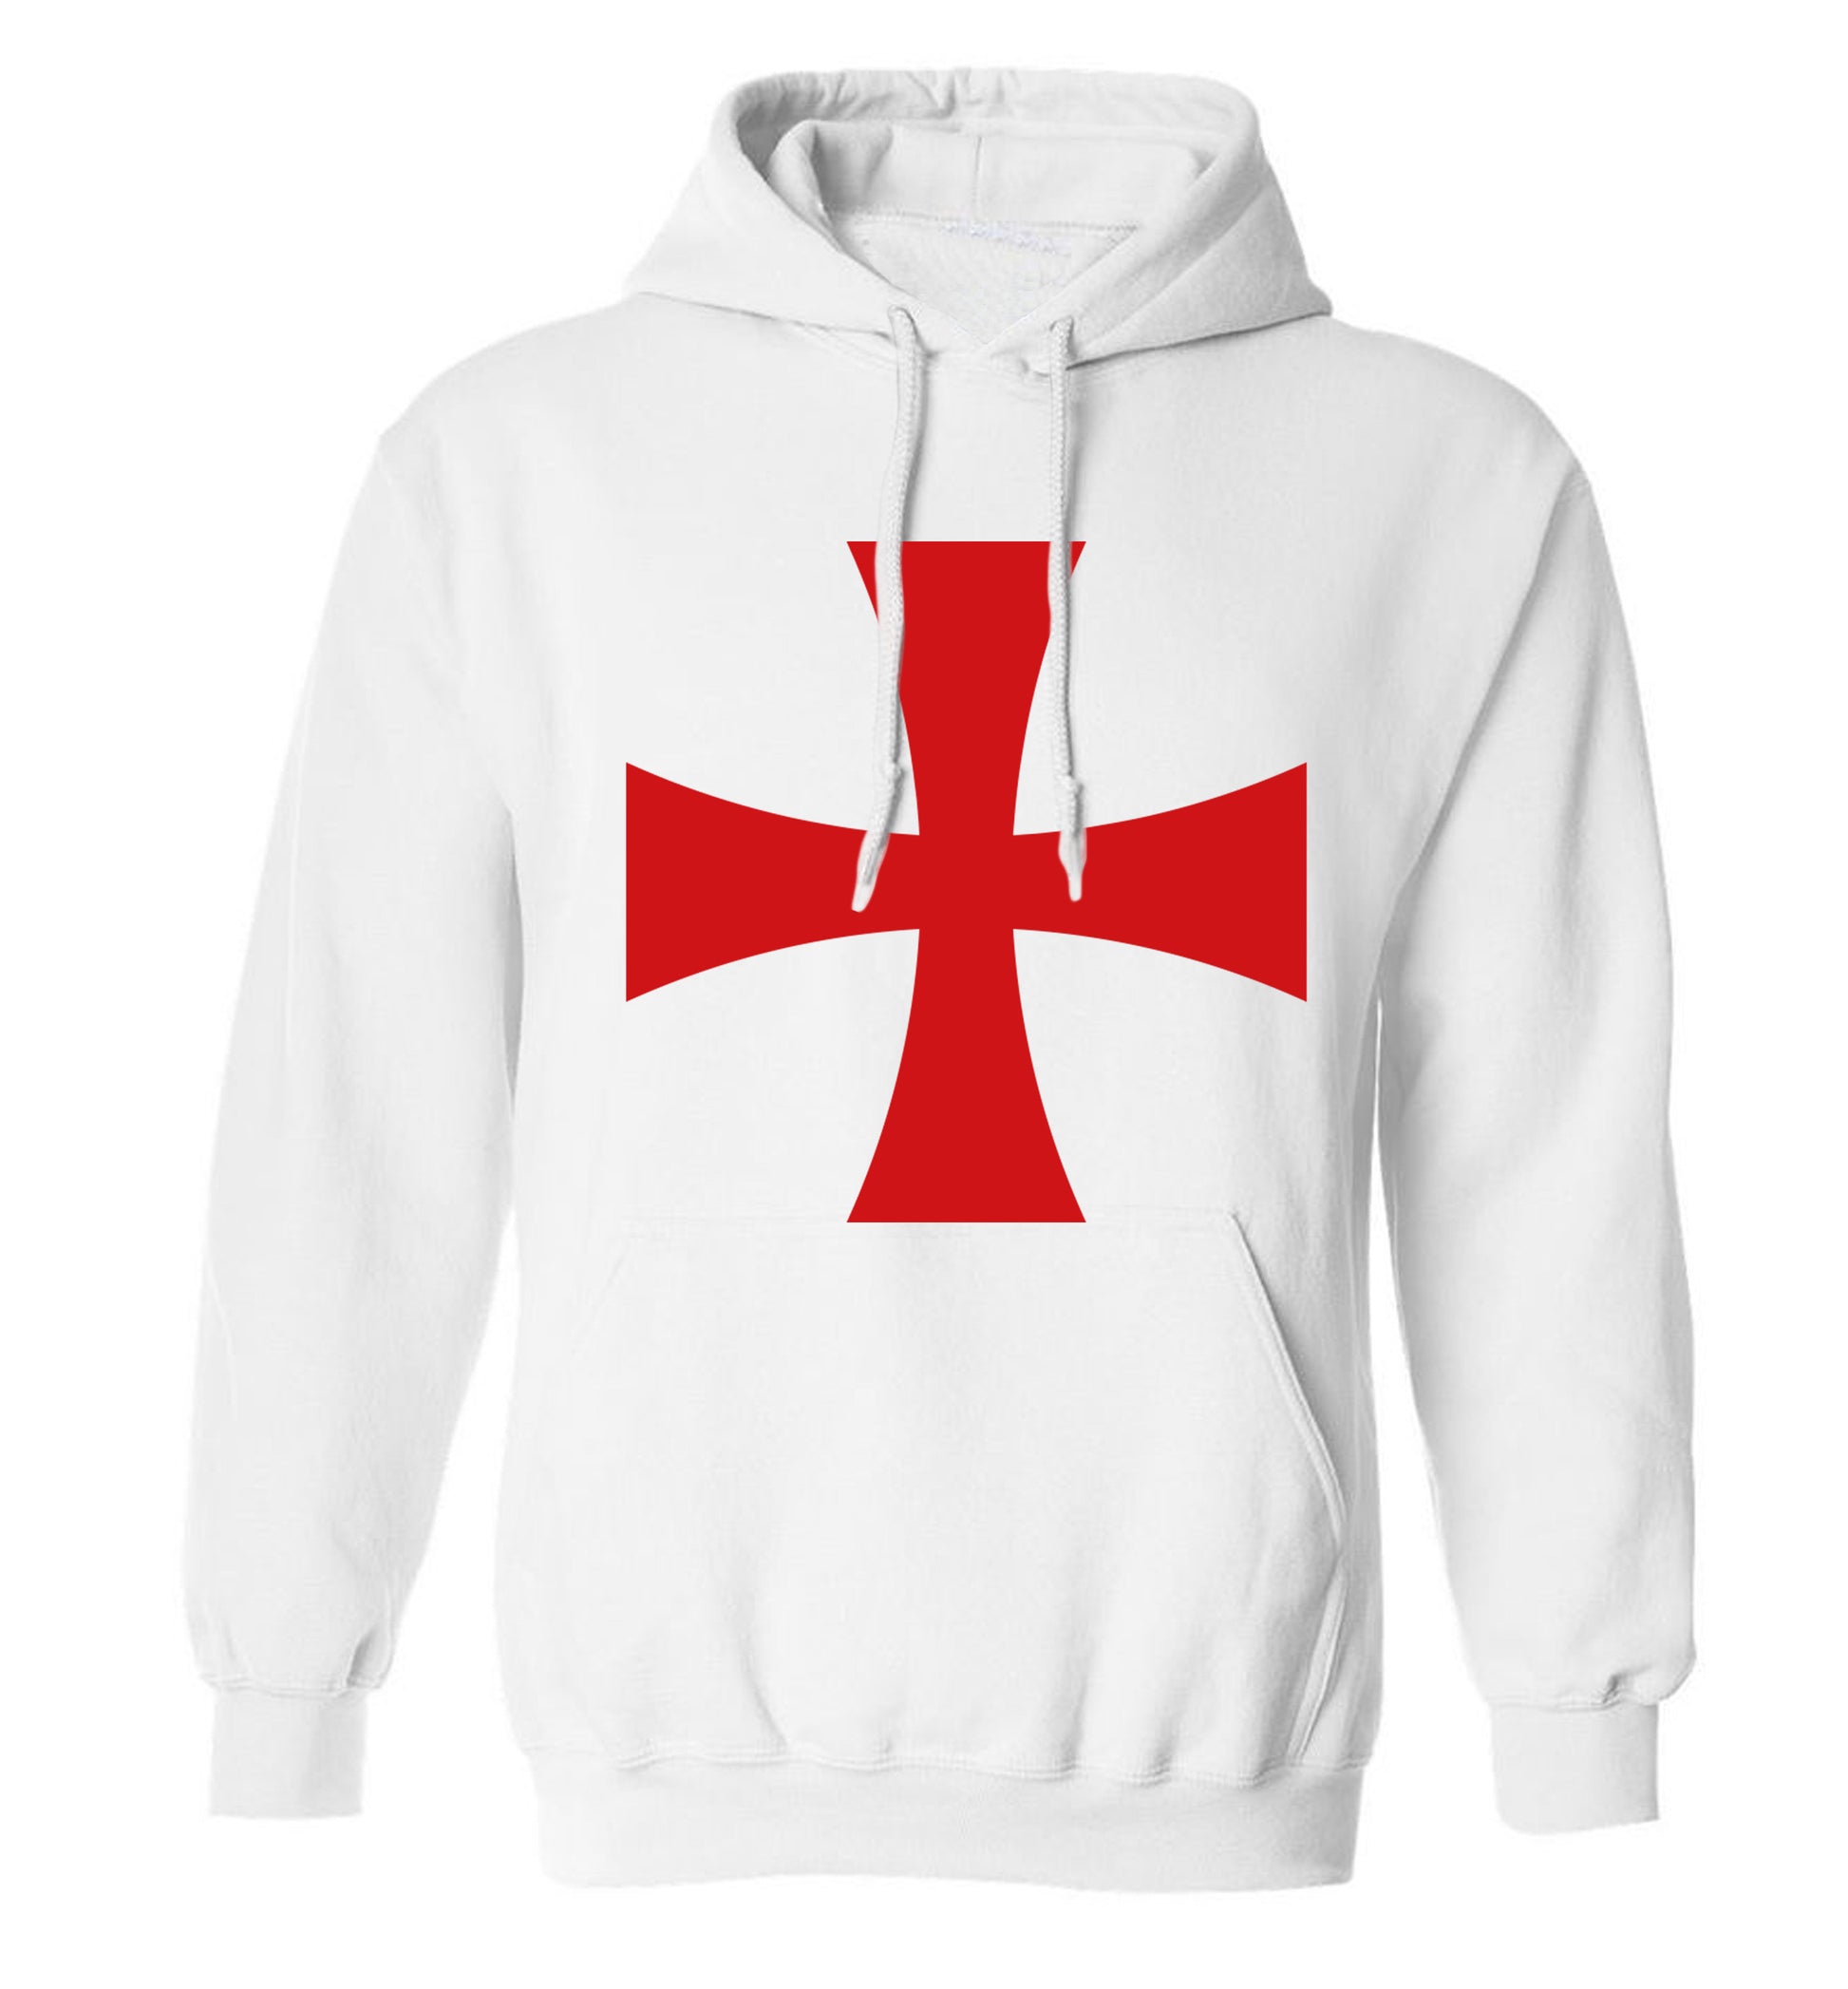 Knights Templar cross adults unisex white hoodie 2XL